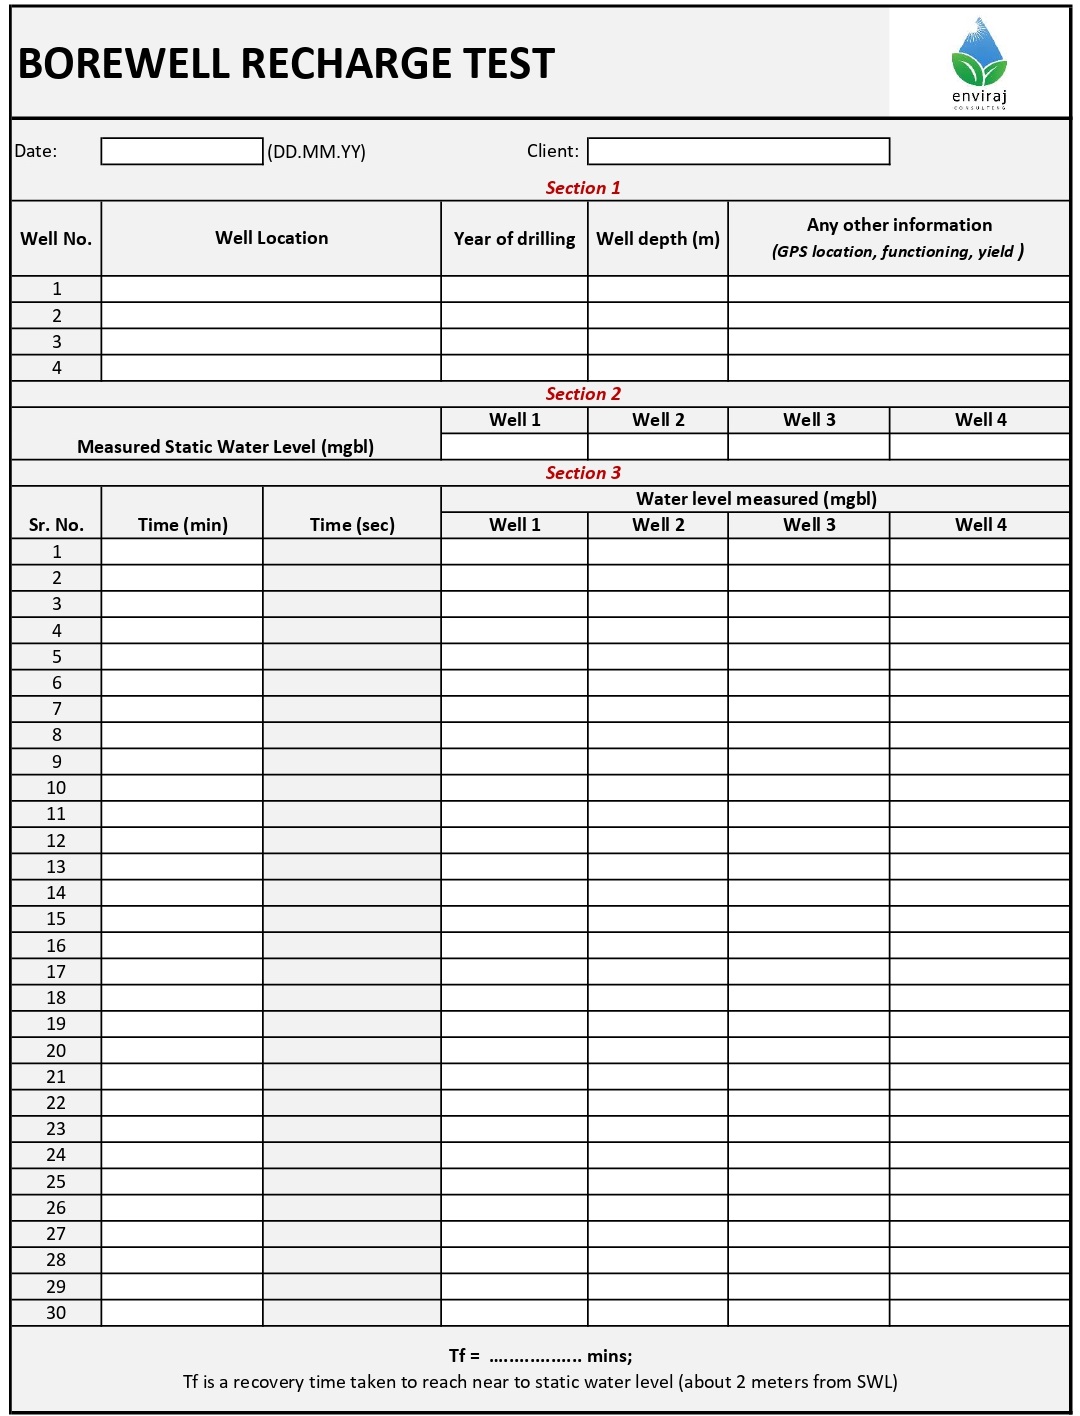 Recharge Test Field Sheet - Enviraj 